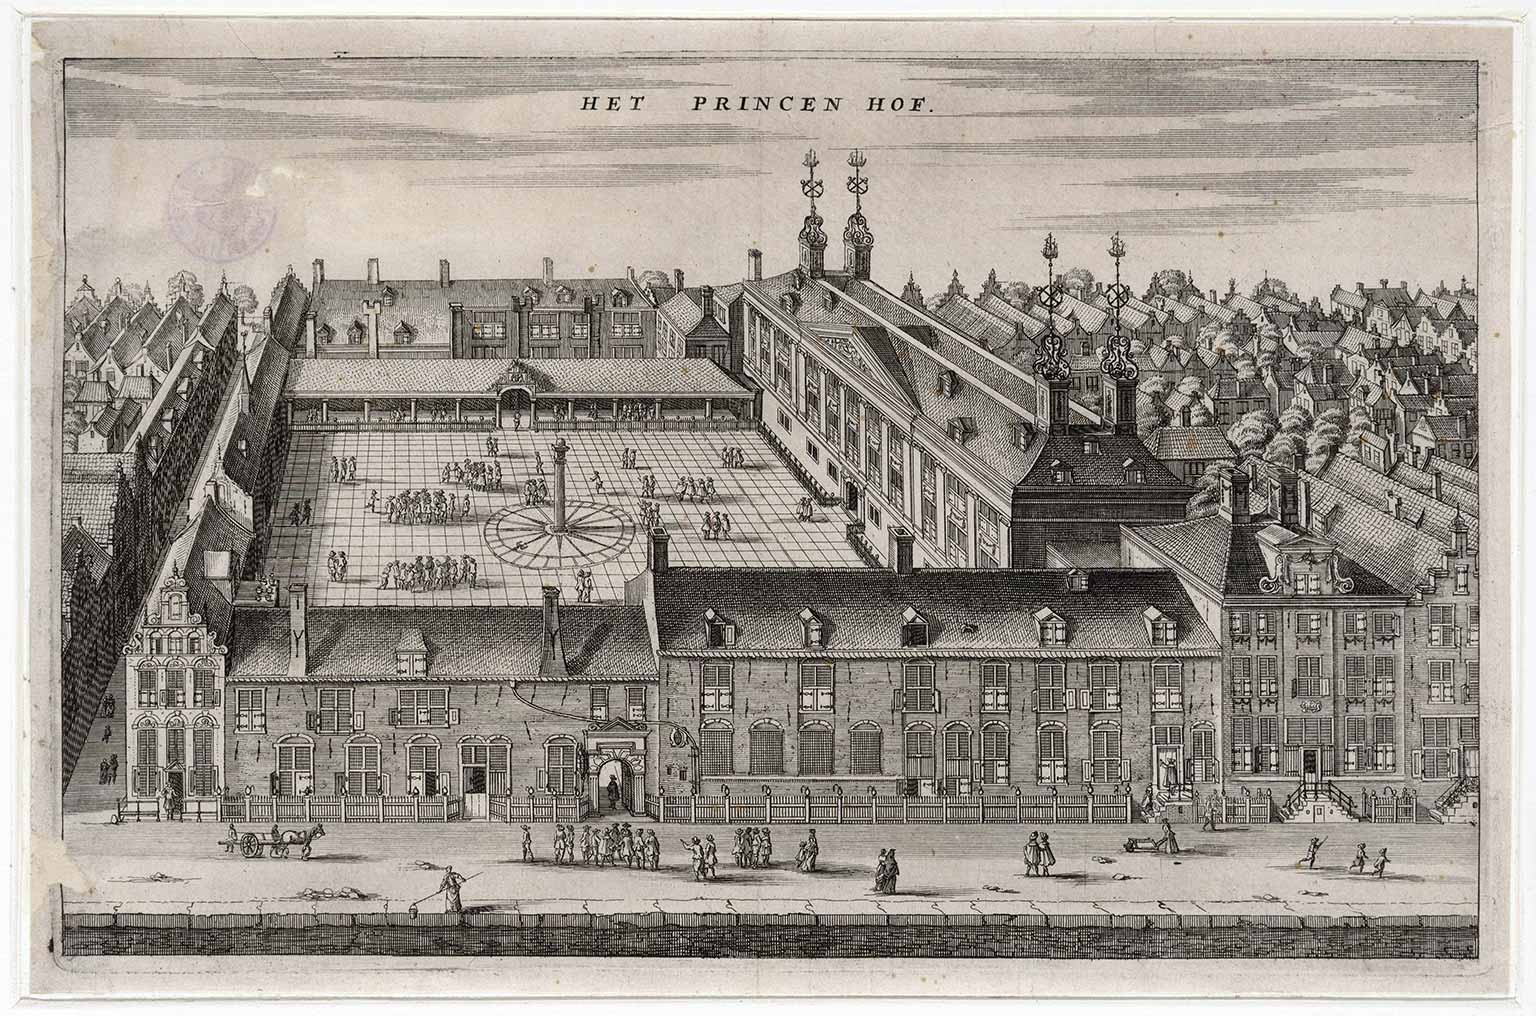 Bird's-eye view of the Prinsenhof, Amsterdam, engraving from 1664